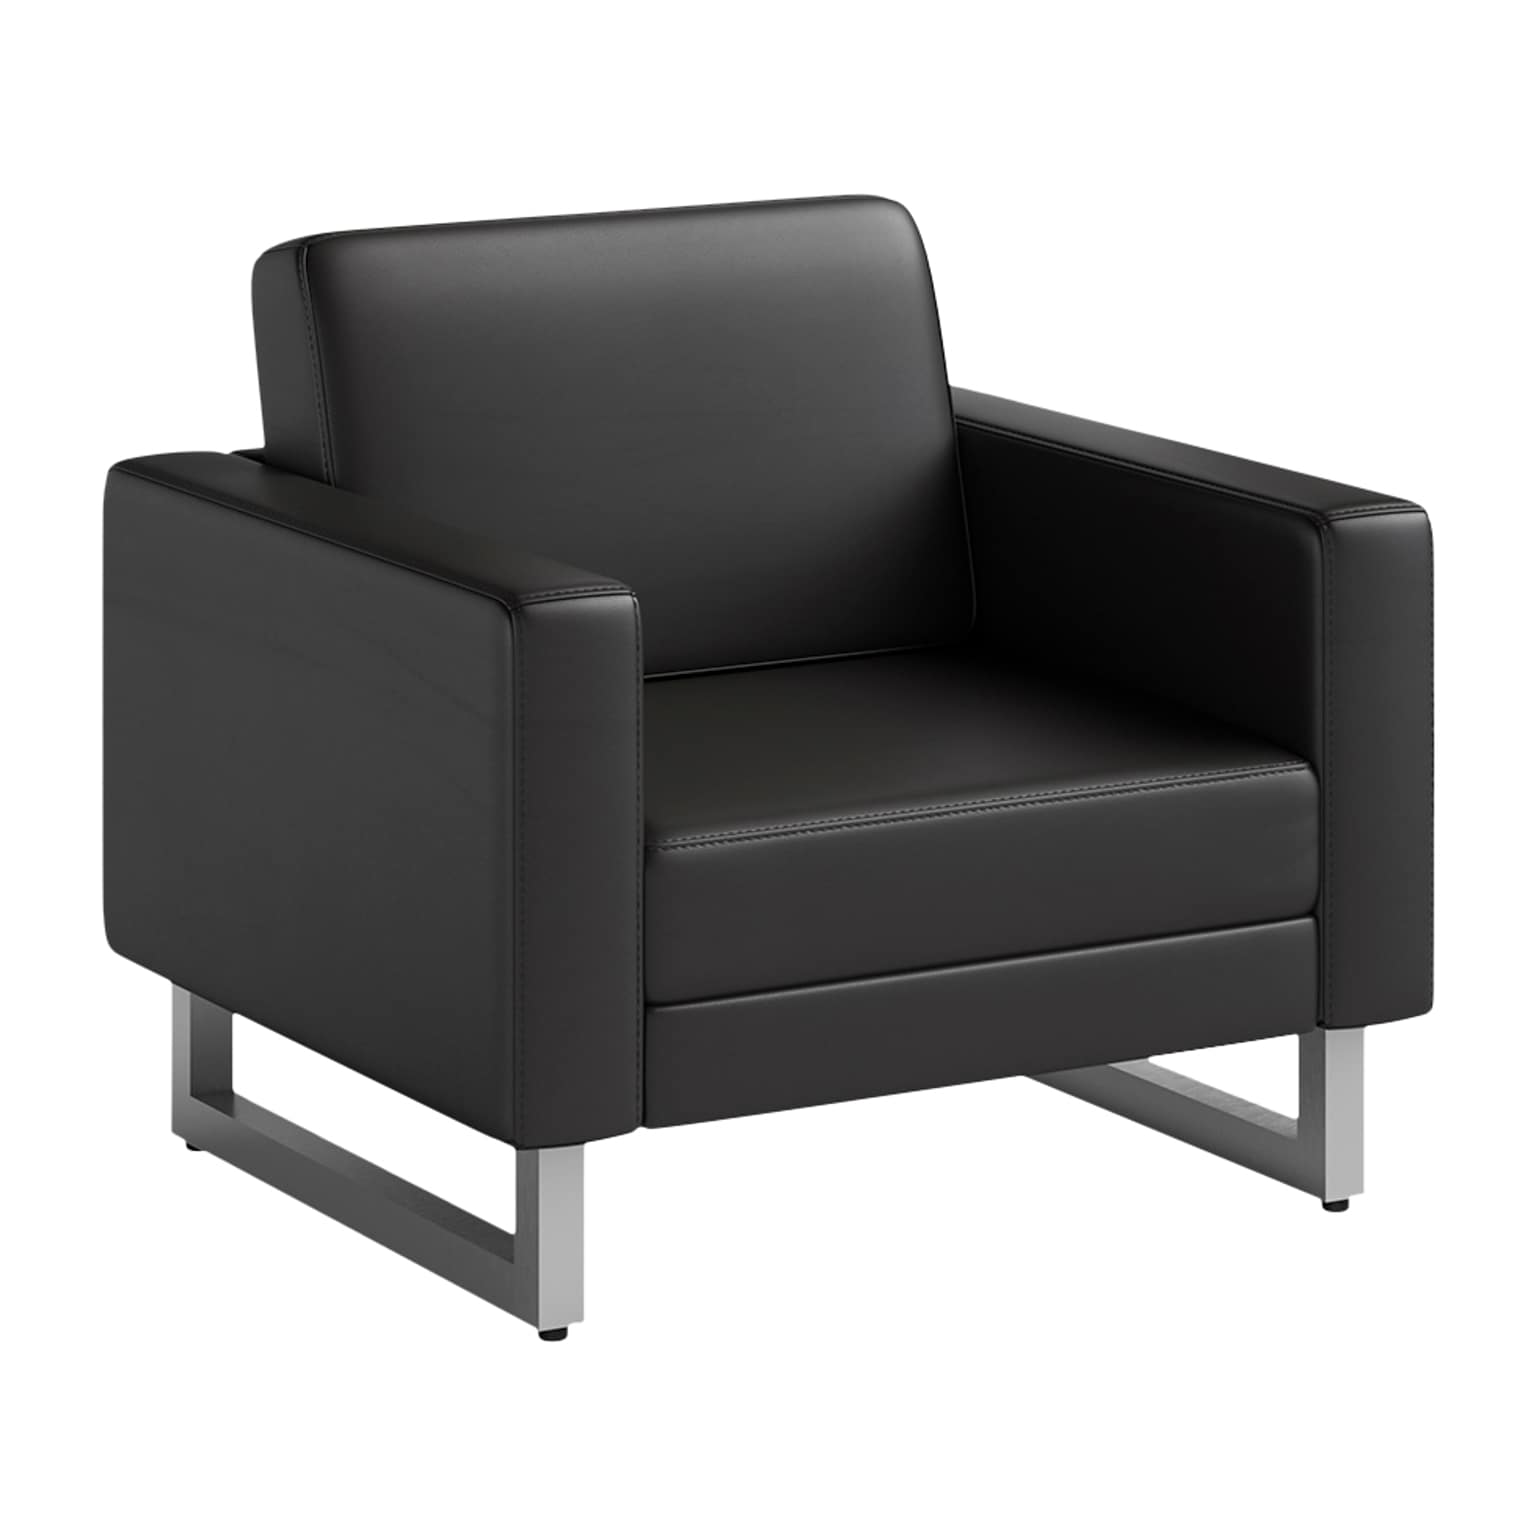 Safco Mirella Vinyl Lounge Chair, Black/Silver (1732MRL2SLVBL)